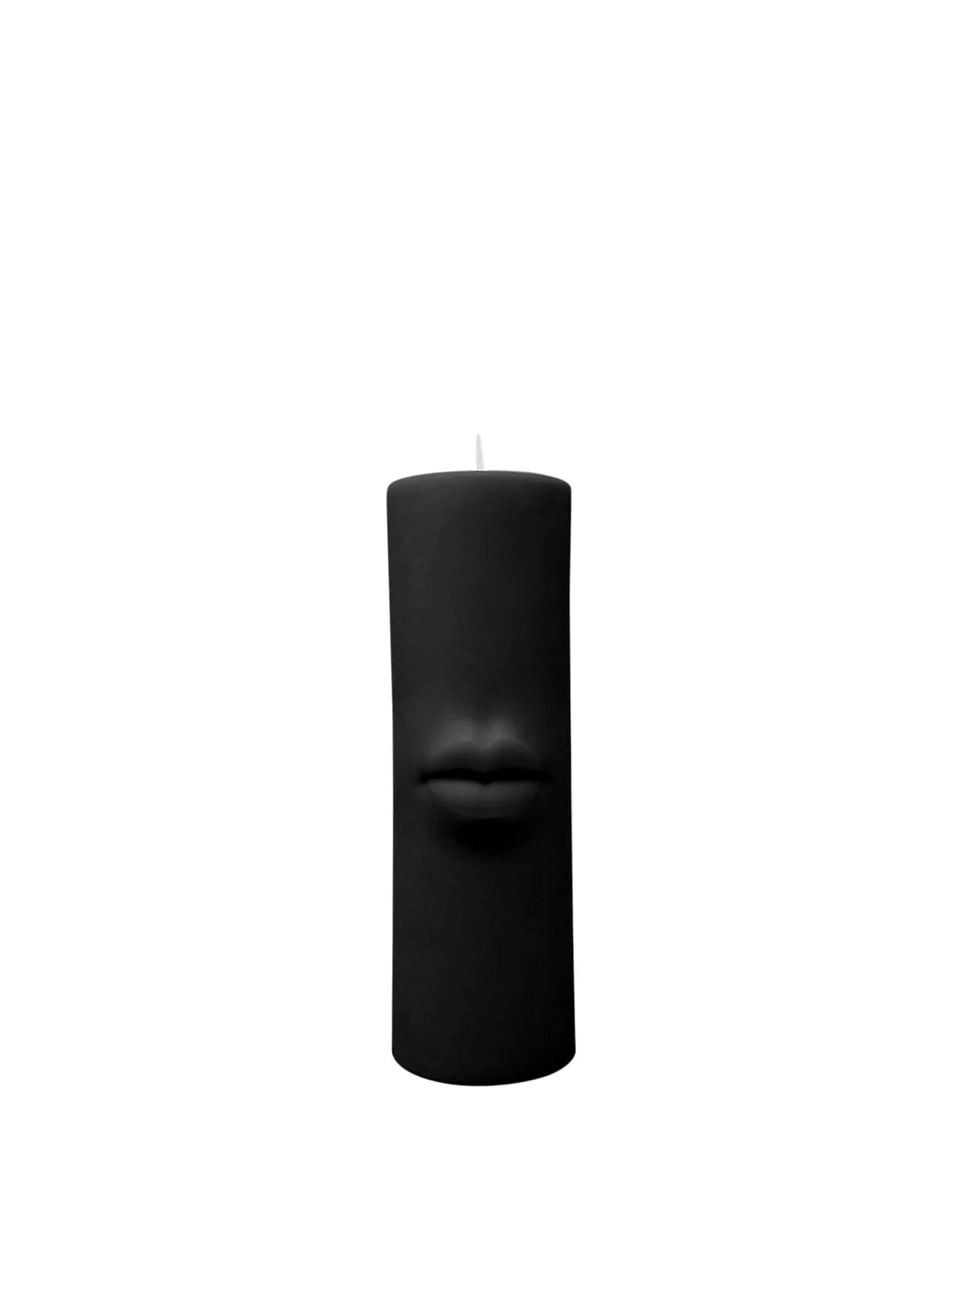 Lips Pillar Candle in Noir